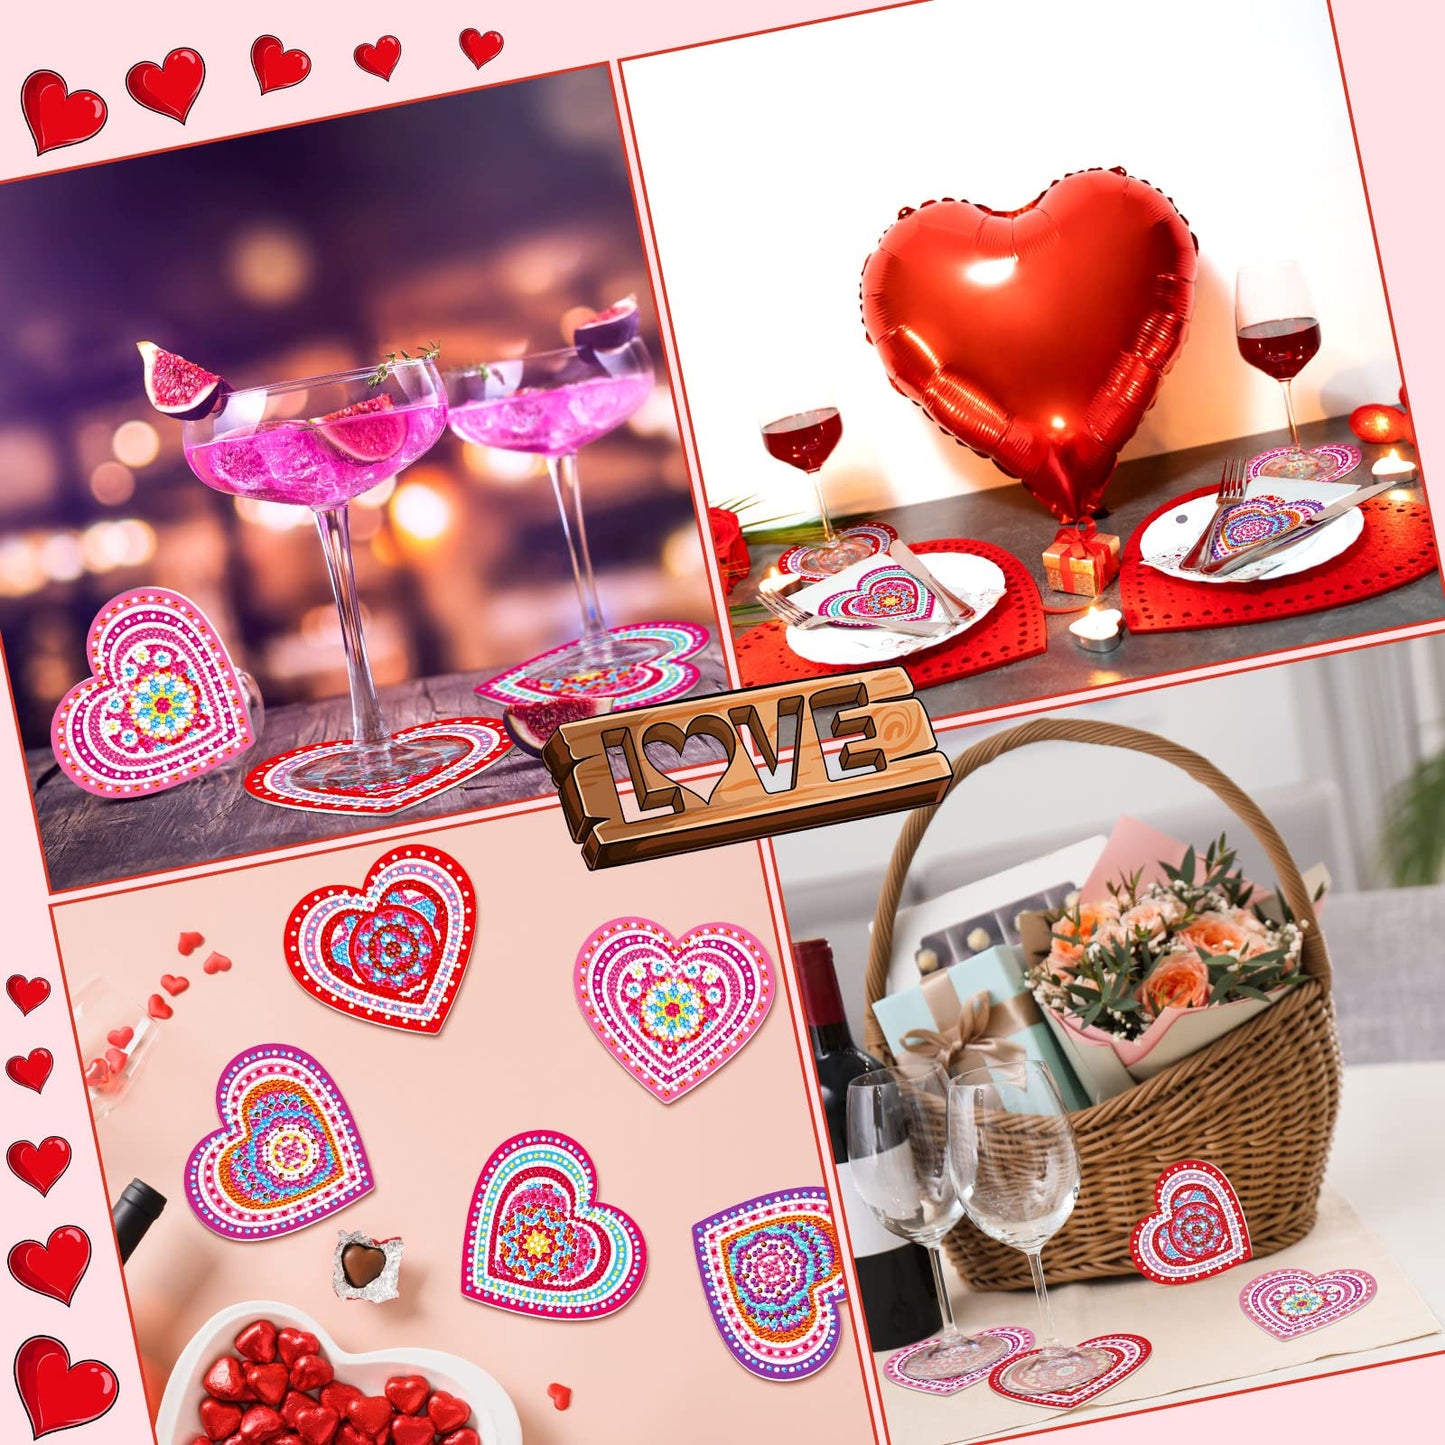 Diy 8pcs/set Valentine's Day  Diamond Painting Coasters with Holder